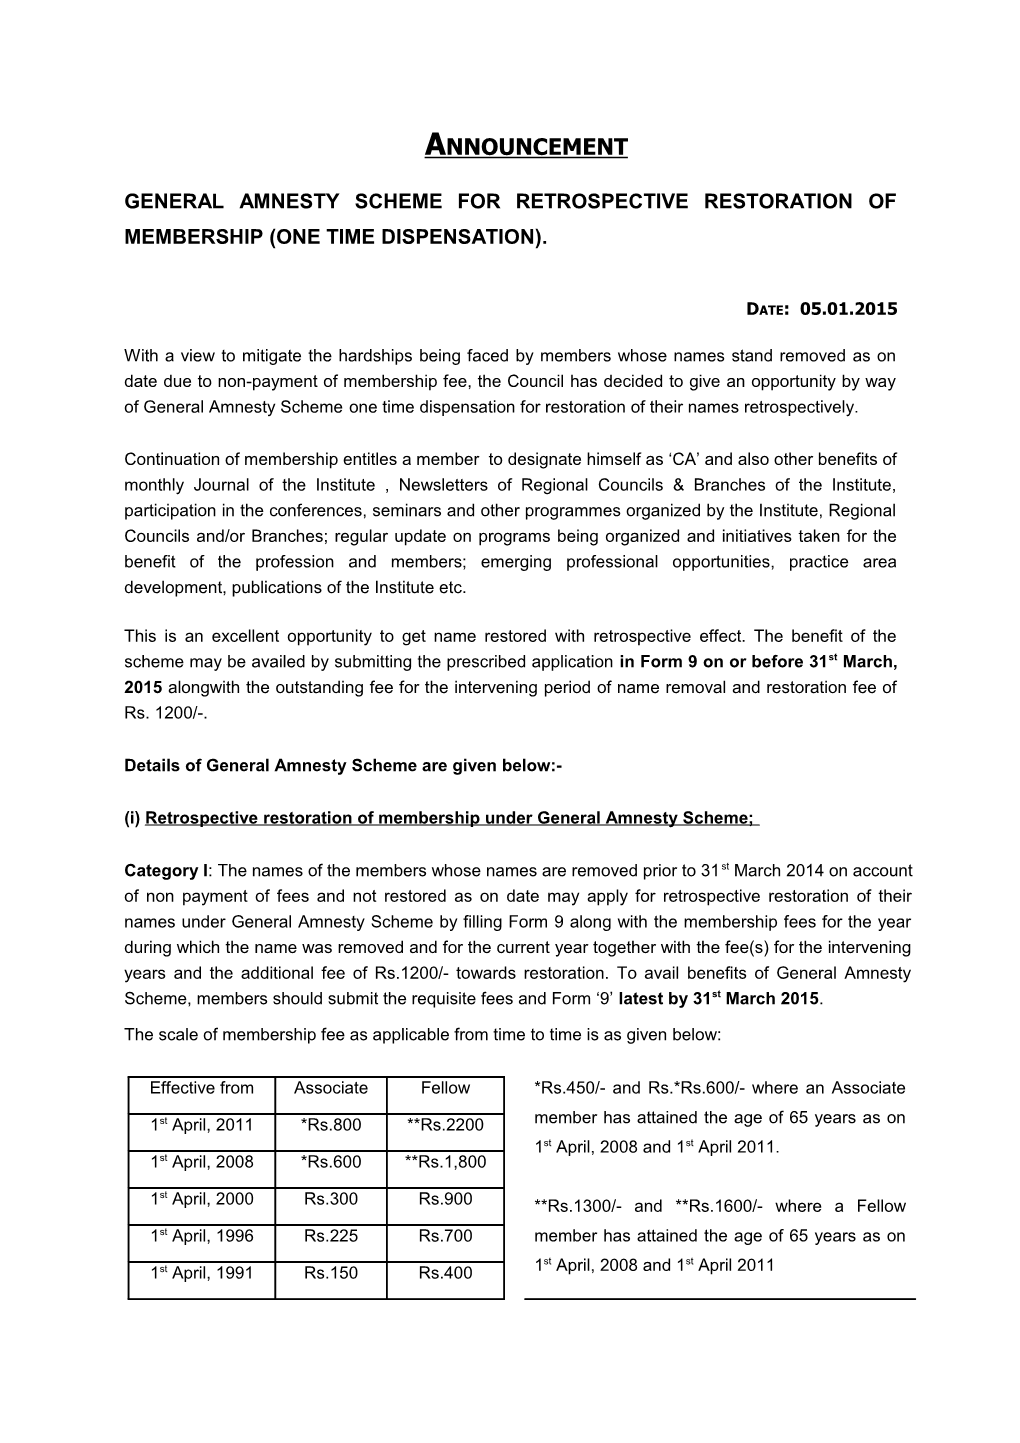 General Amnesty Scheme for Retrospective Restoration of Membership(One Time Dispensation)